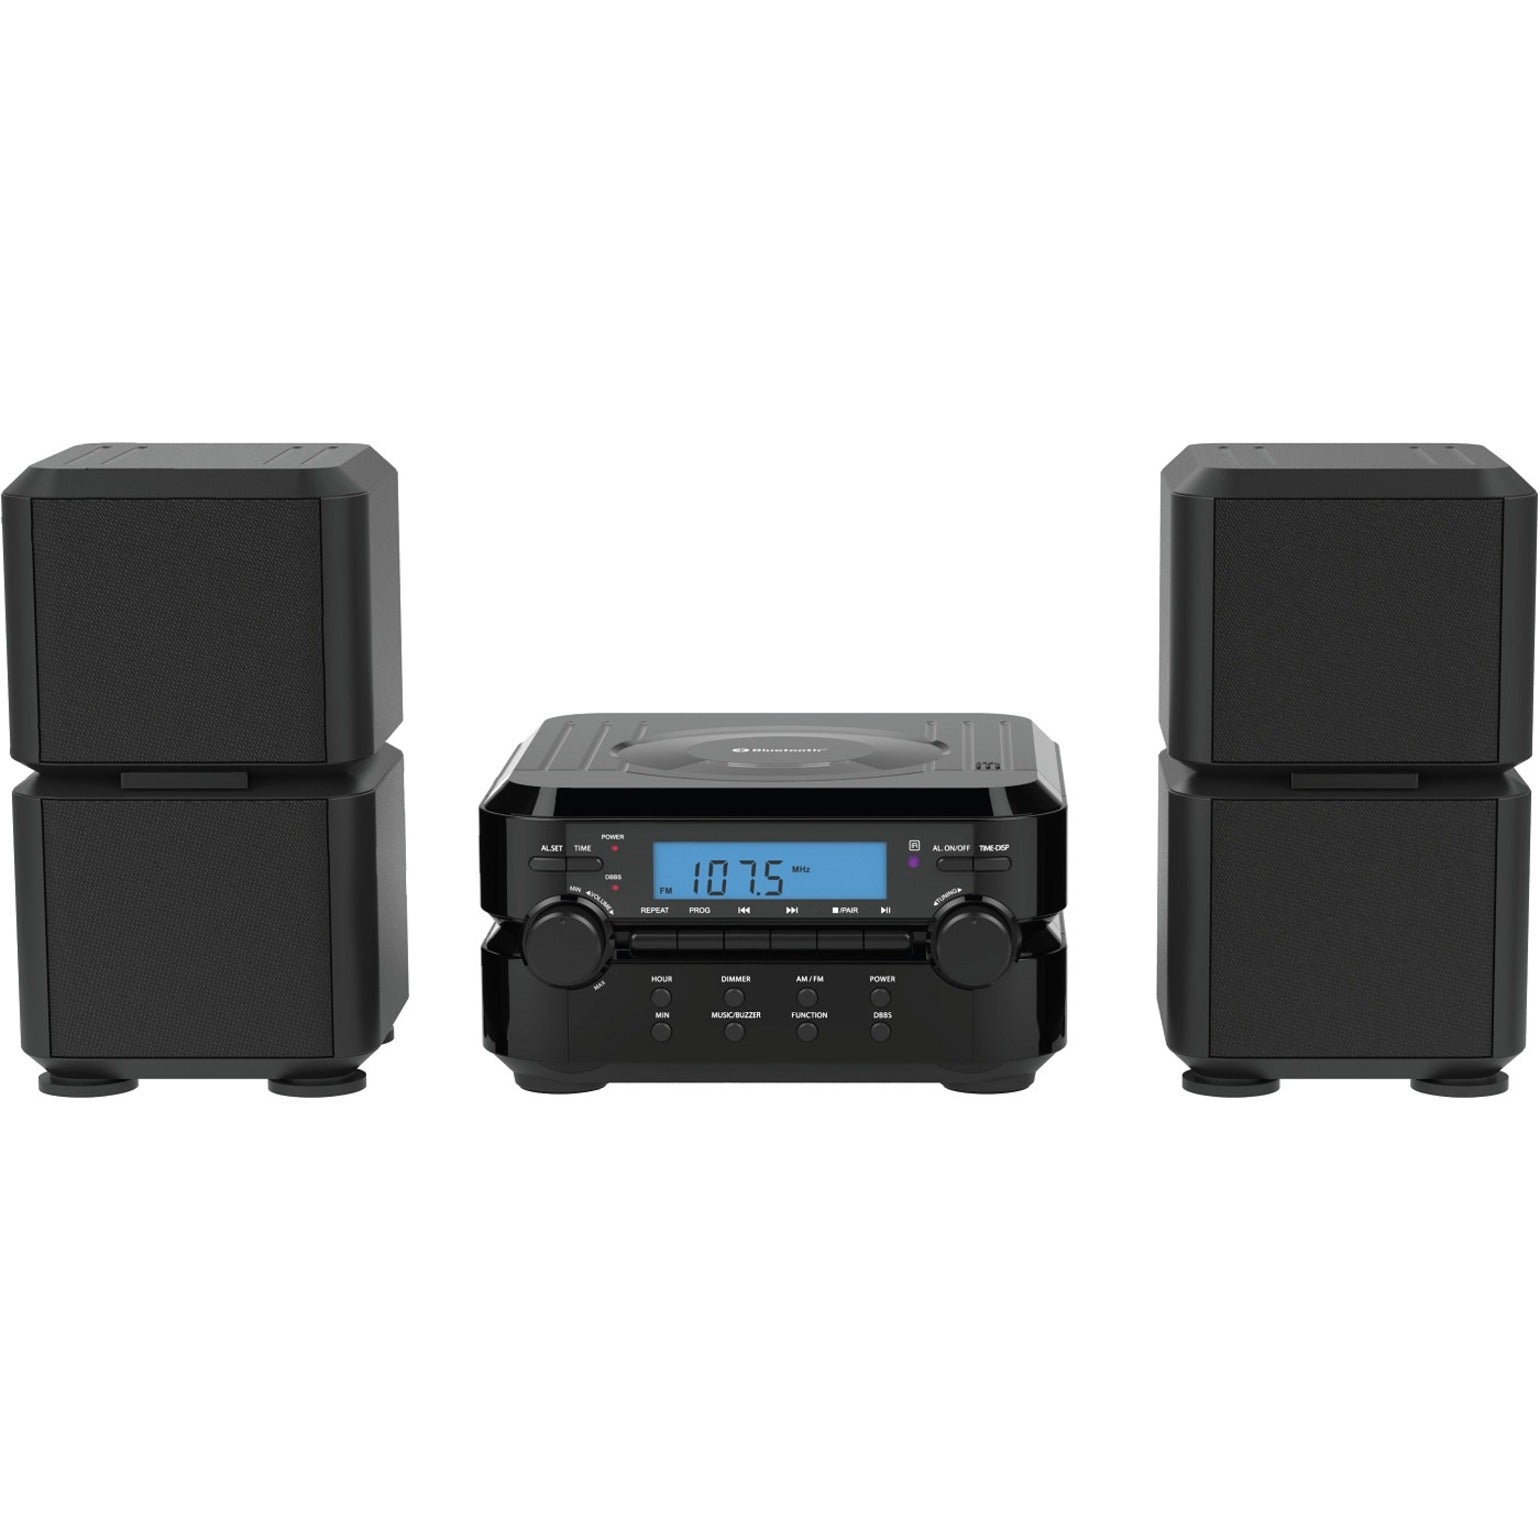 Naxa NS-441 Digital CD Micro System, 4.40W RMS, LCD Display, Remote Control